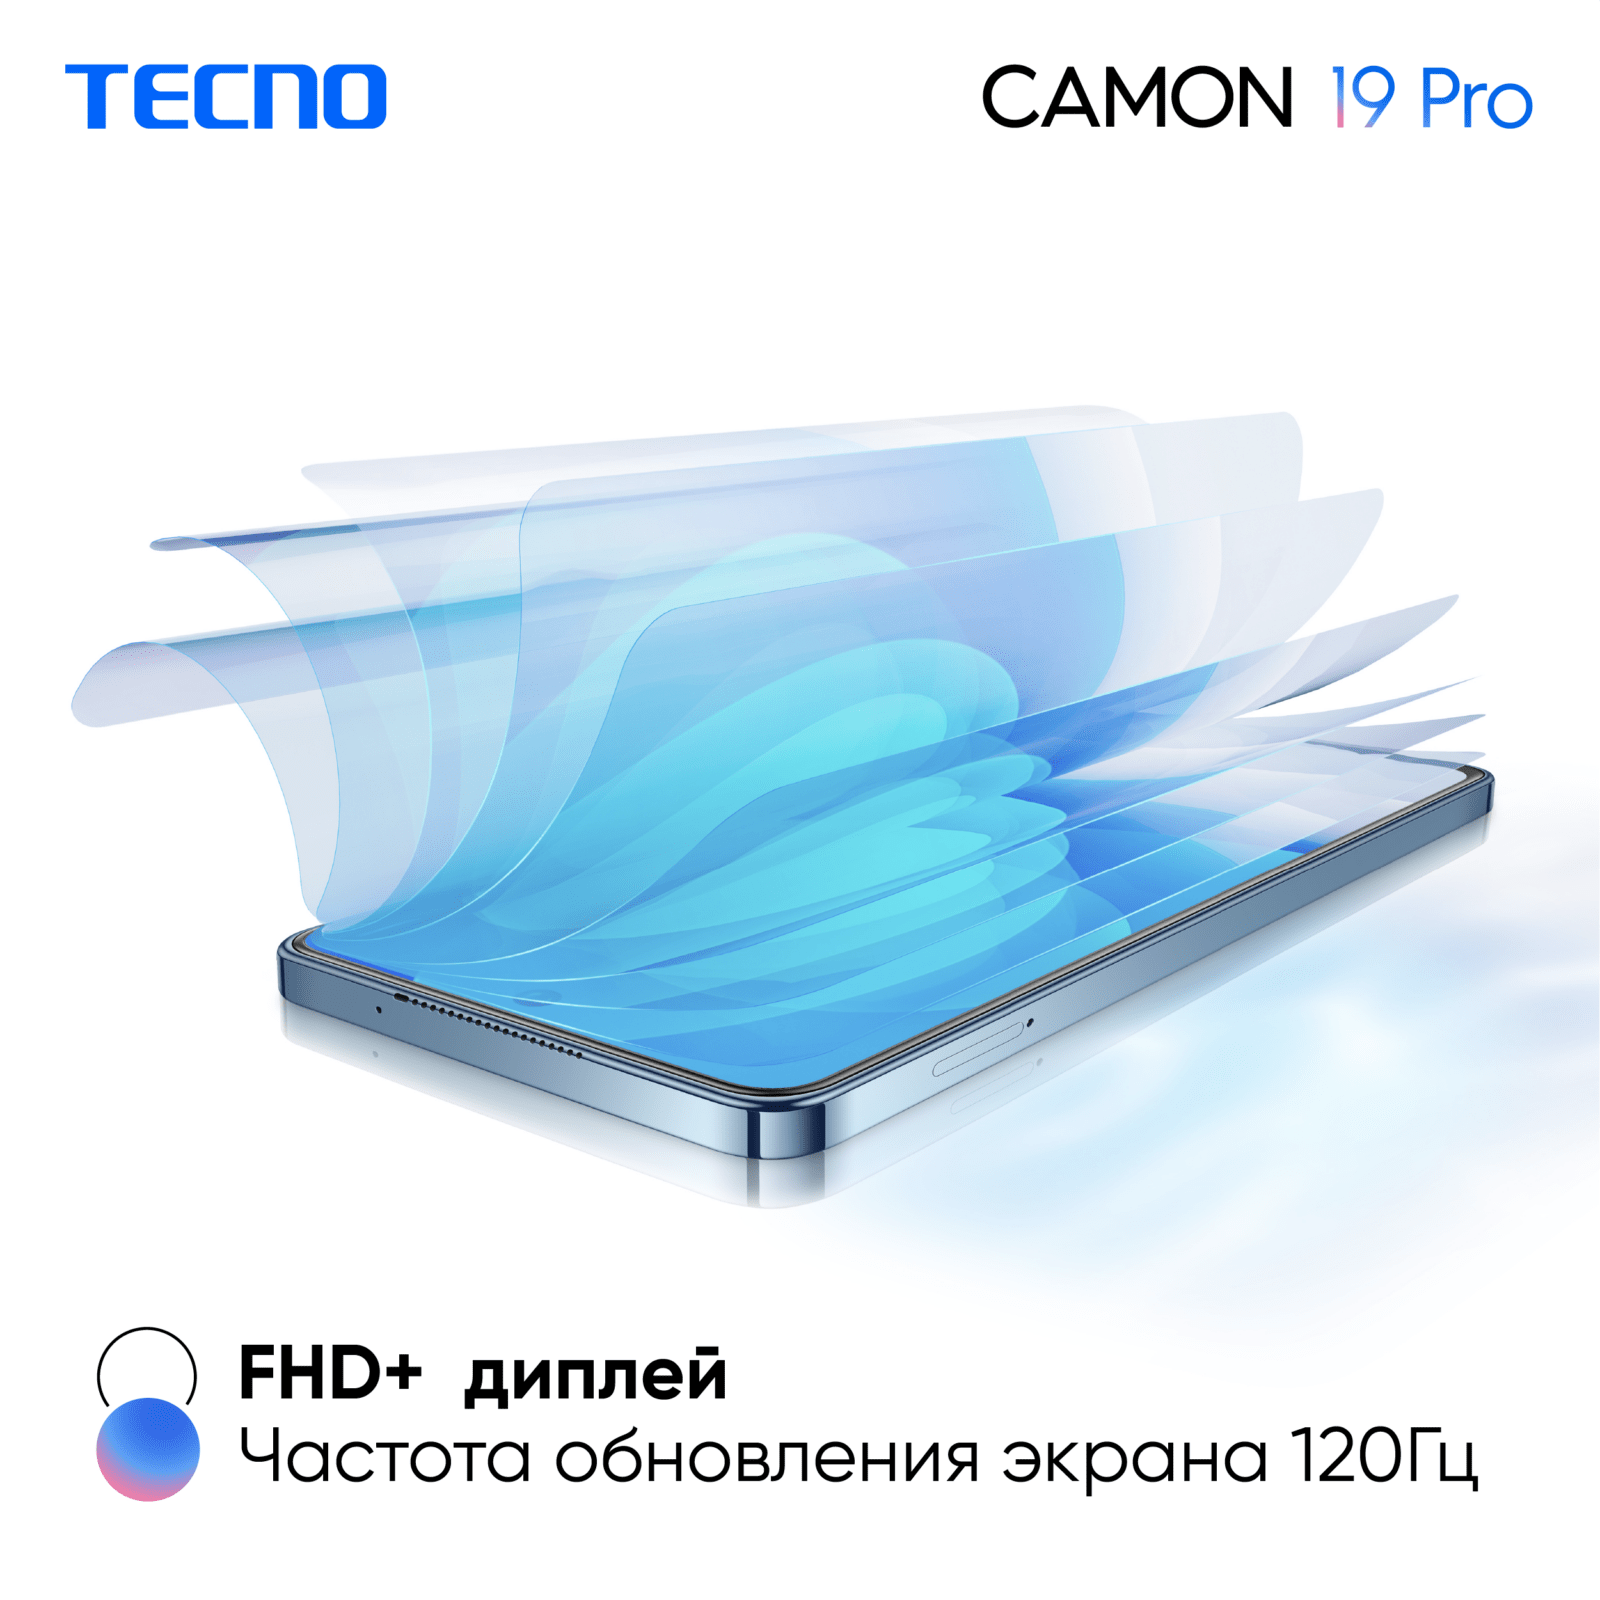 Tecno начал продажи смартфонов CAMON 19 в России (KSP CAMON 19 Pro 05)